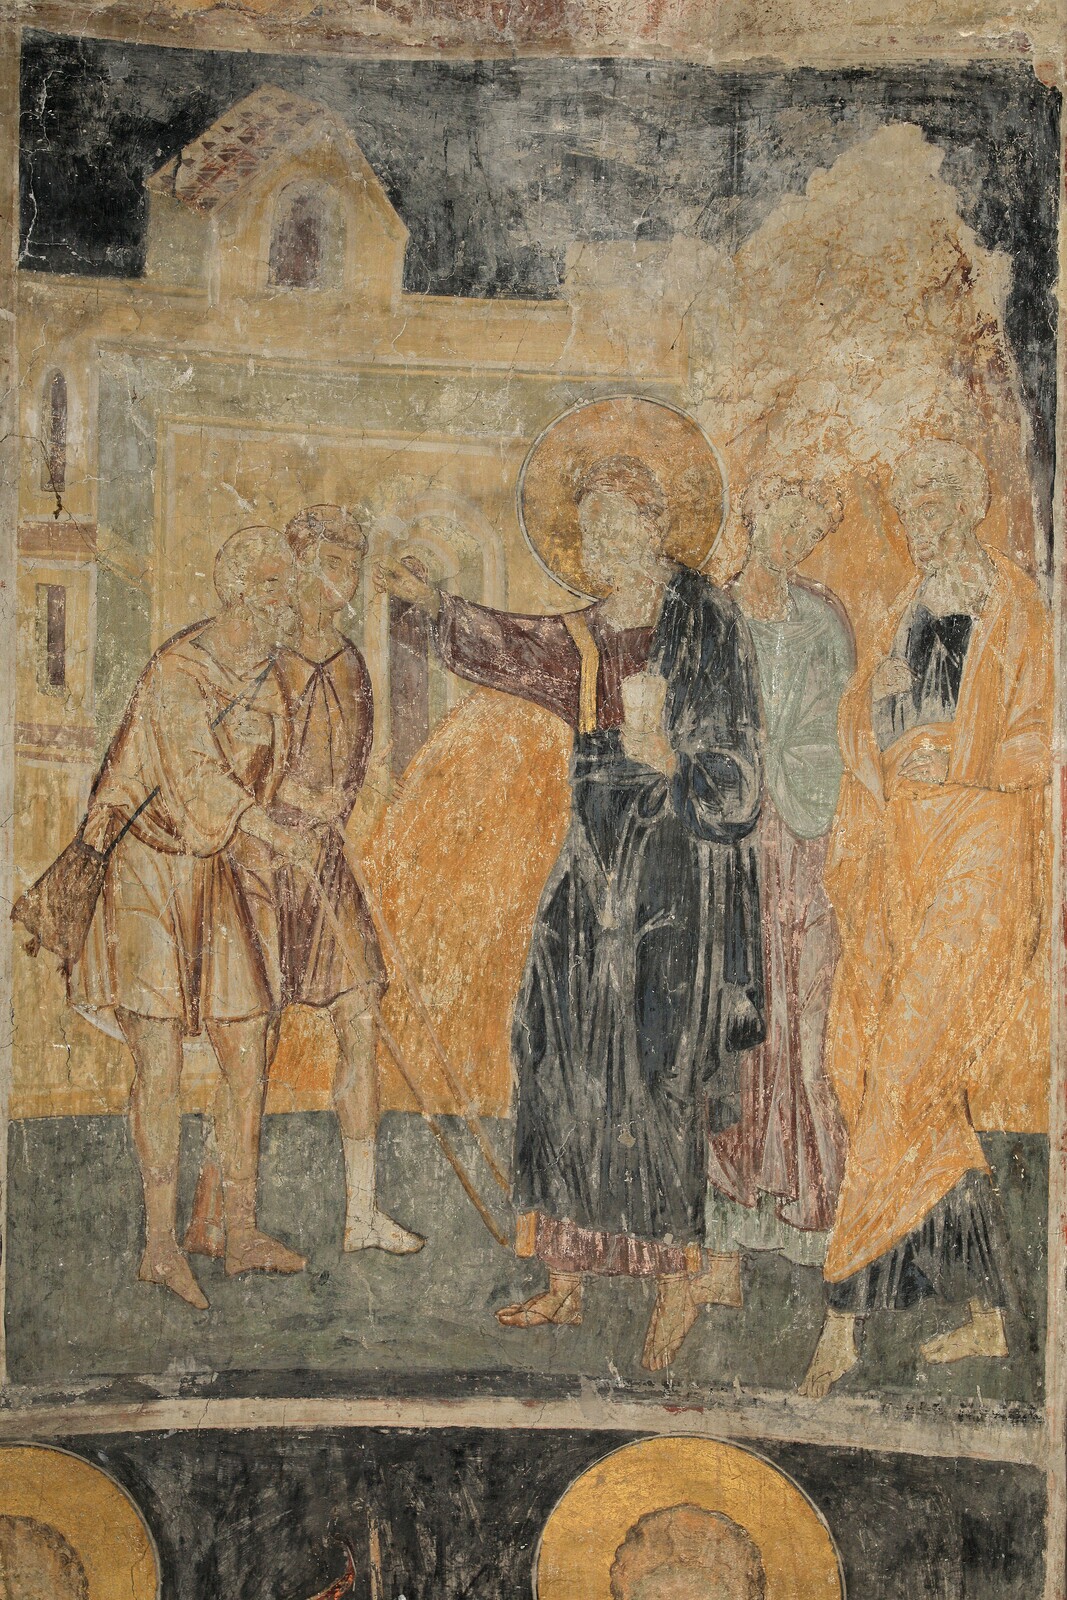 Christ Healing the Blind Mеn, detail